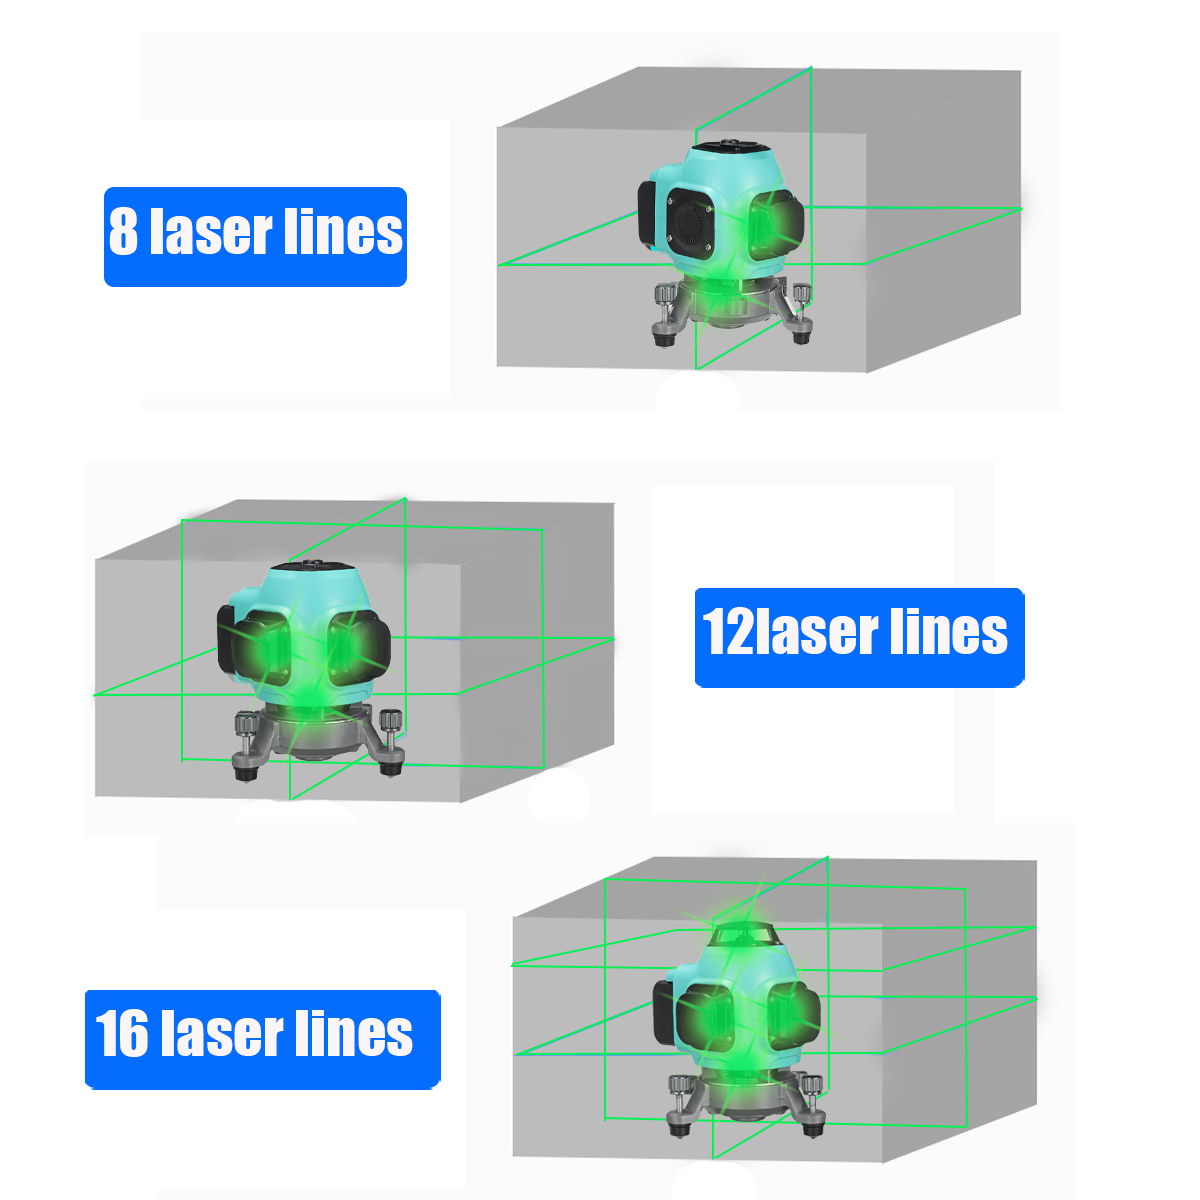 81216-Line-360deg-Rotary-Leveling-Cross-Measure-Tool-Green-Laser-Level-Tool-Kit-with-2pcs-Batteries-1914854-4